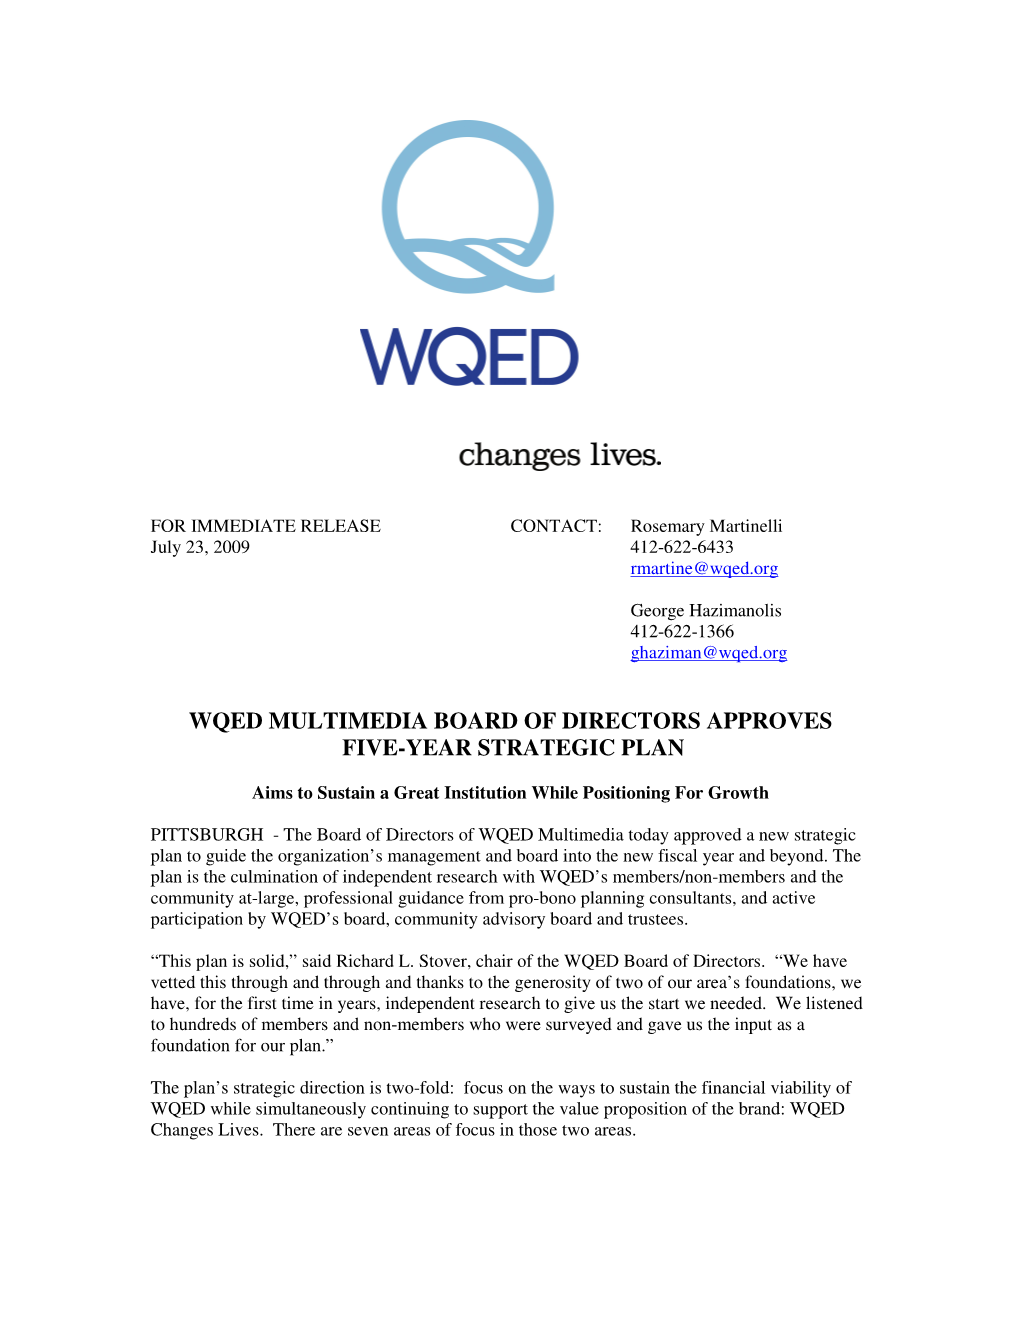 Wqed Multimedia Board of Directors Approves Five-Year Strategic Plan